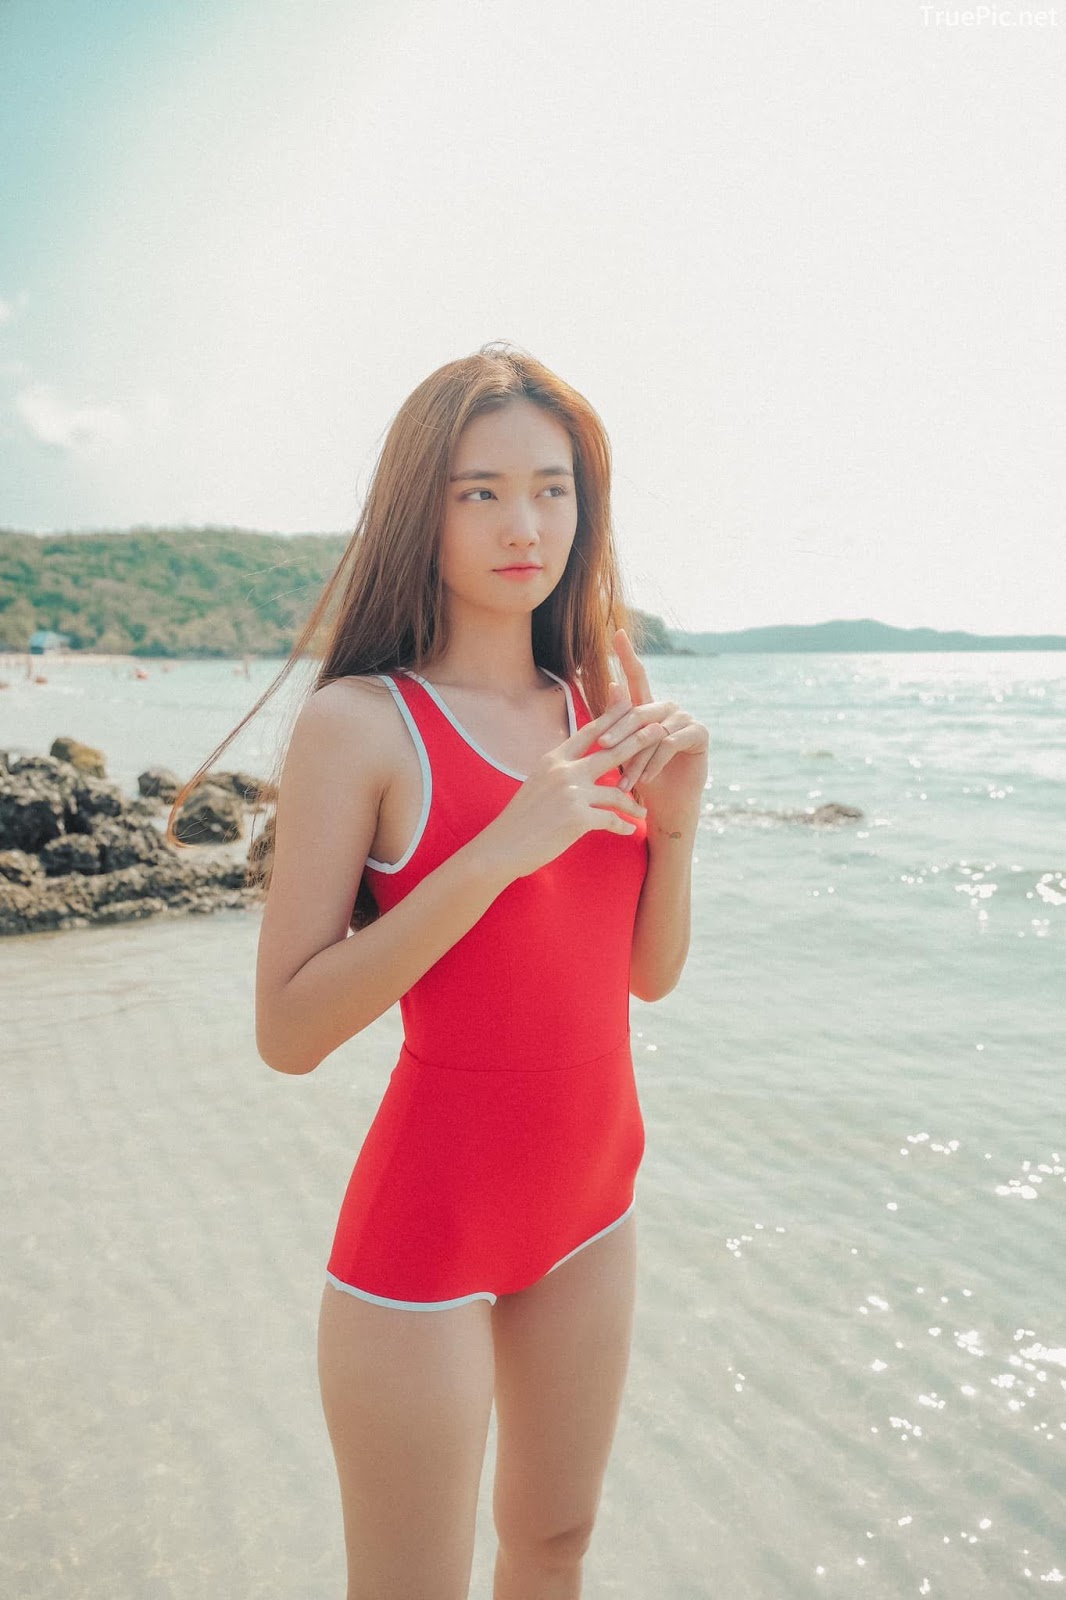 Miss Teen Thailand - Kanyarat Ruangrung - The Red Monokini On The Beach - TruePic.net - Picture 31